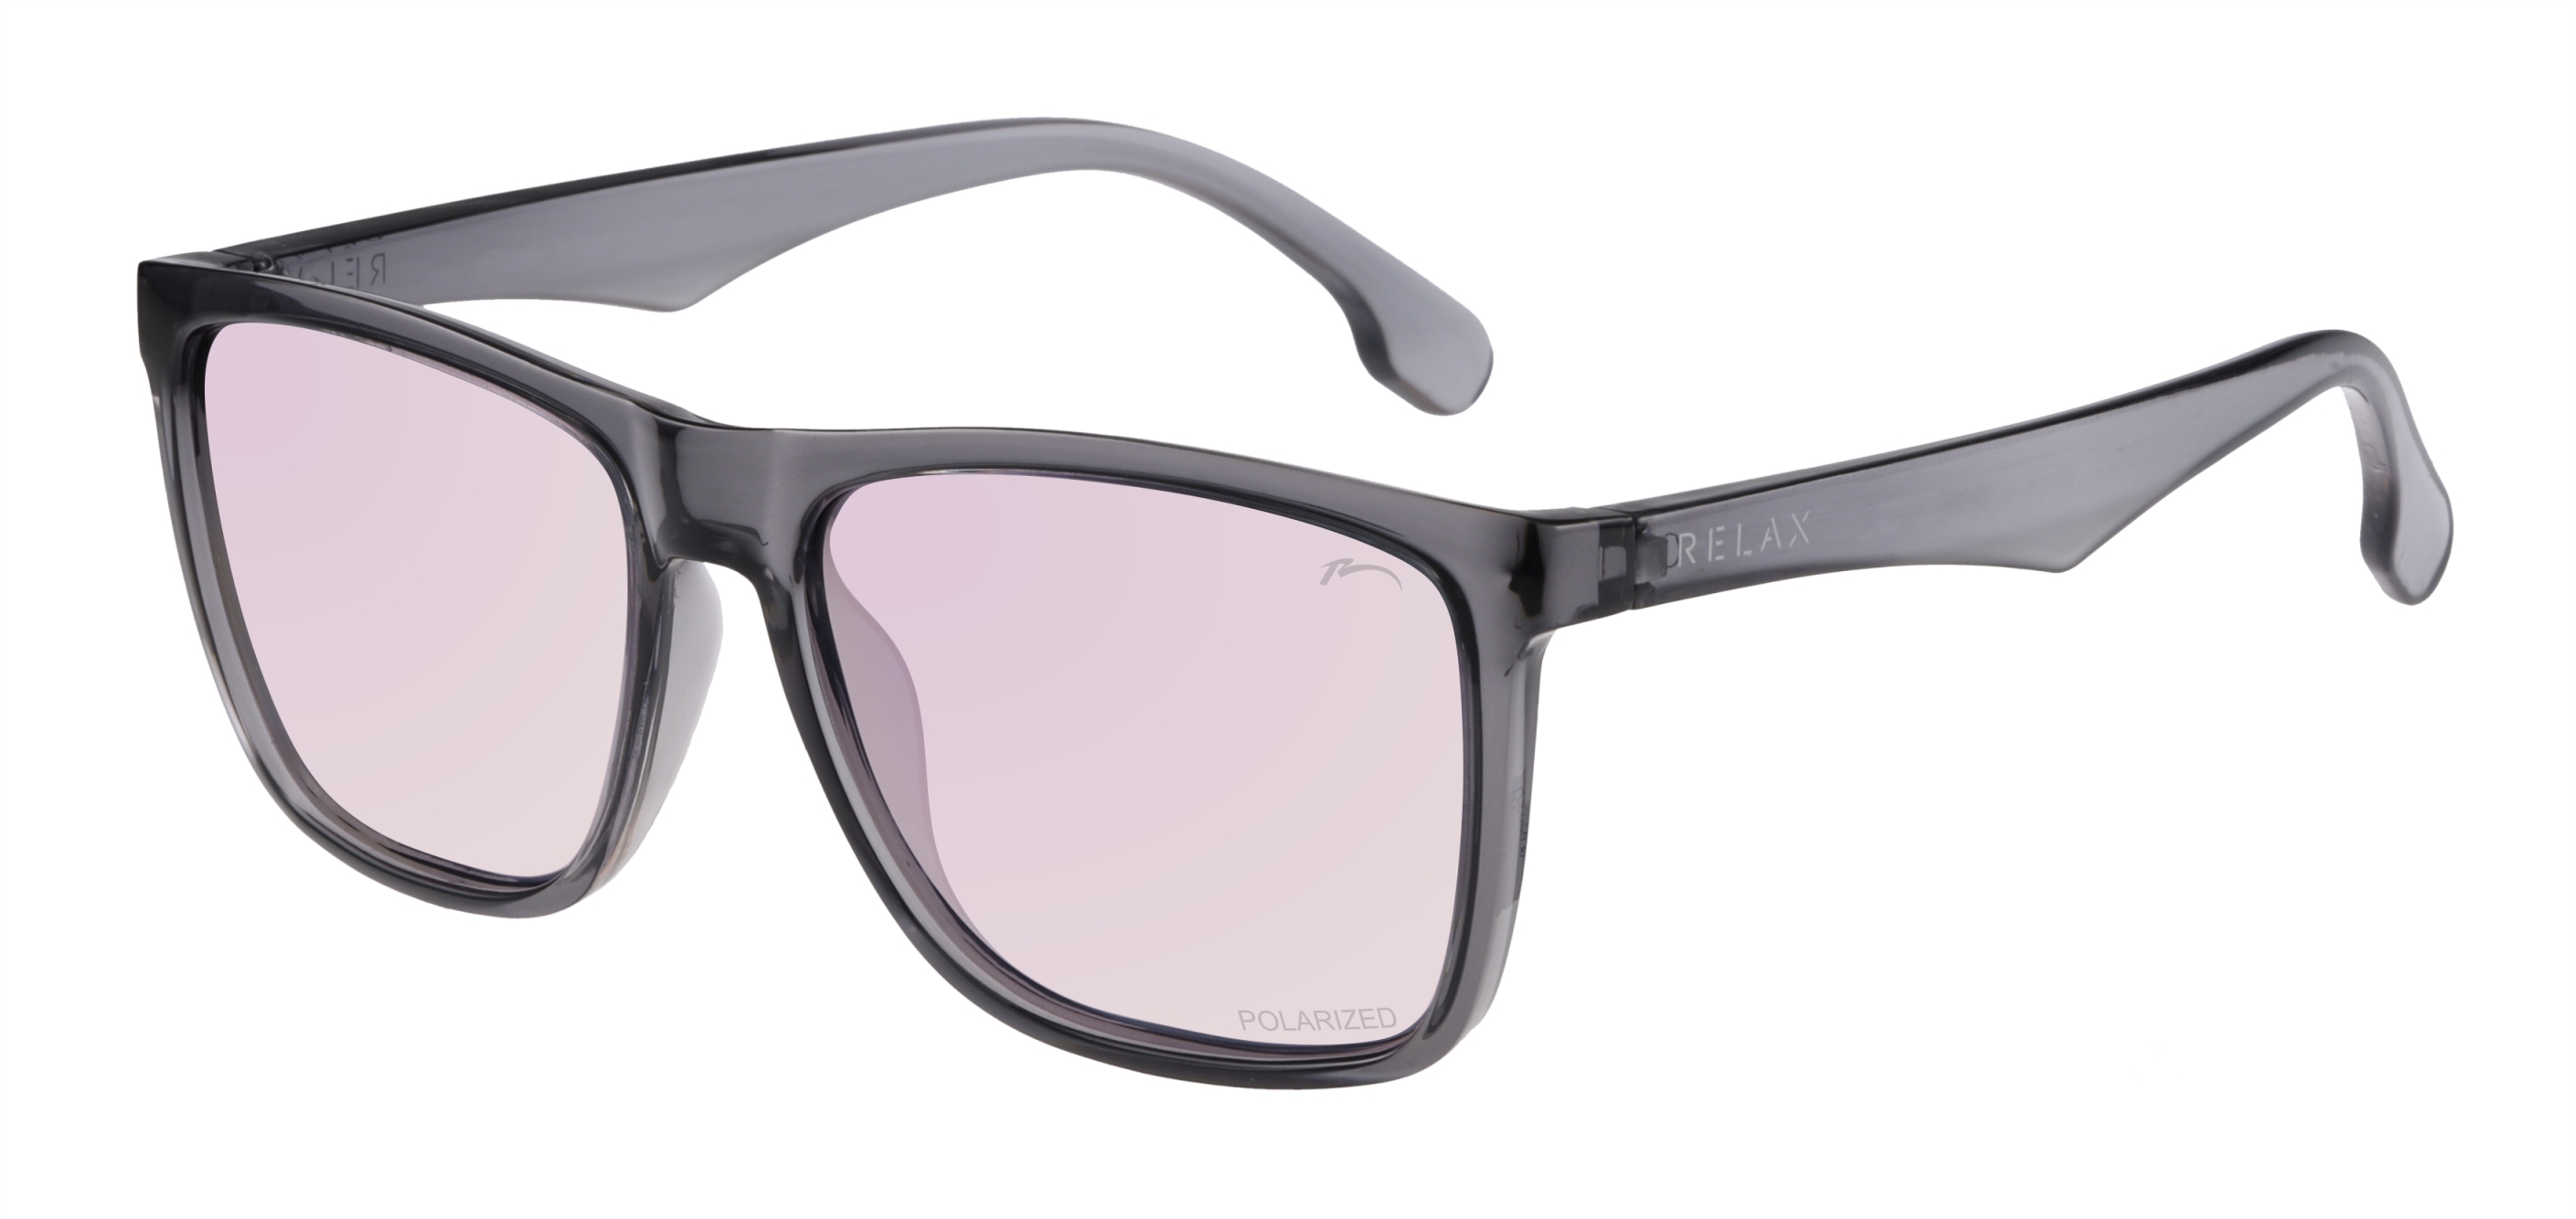 Polarized sunglasses  Relax Alburry R2358C standard